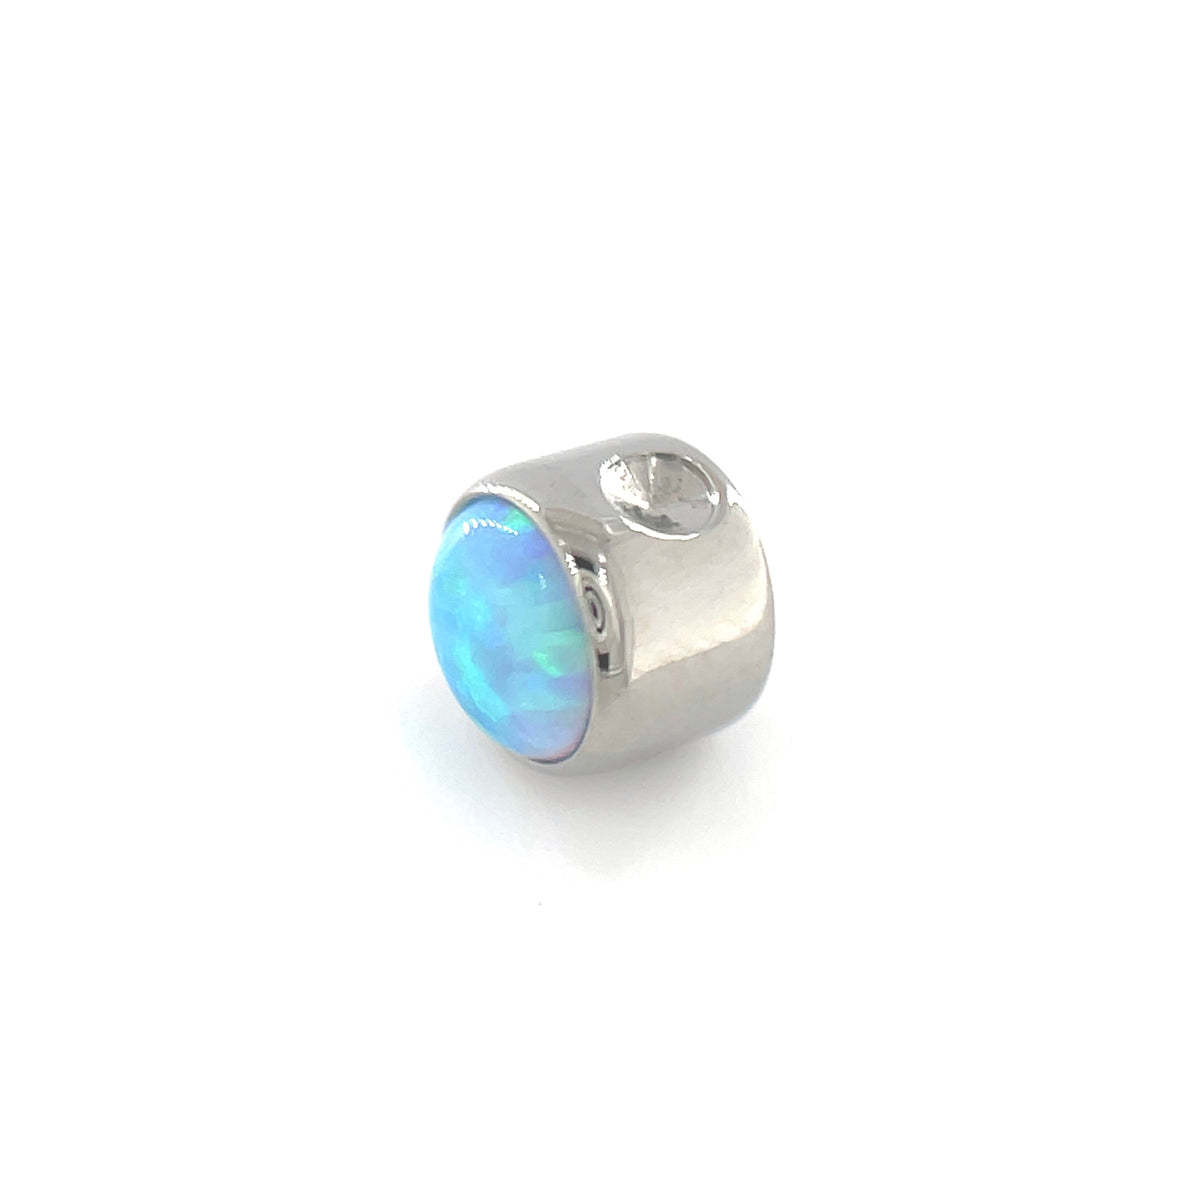 Industrial Strength Titanium Sky Blue Opal Captive Bead Ring